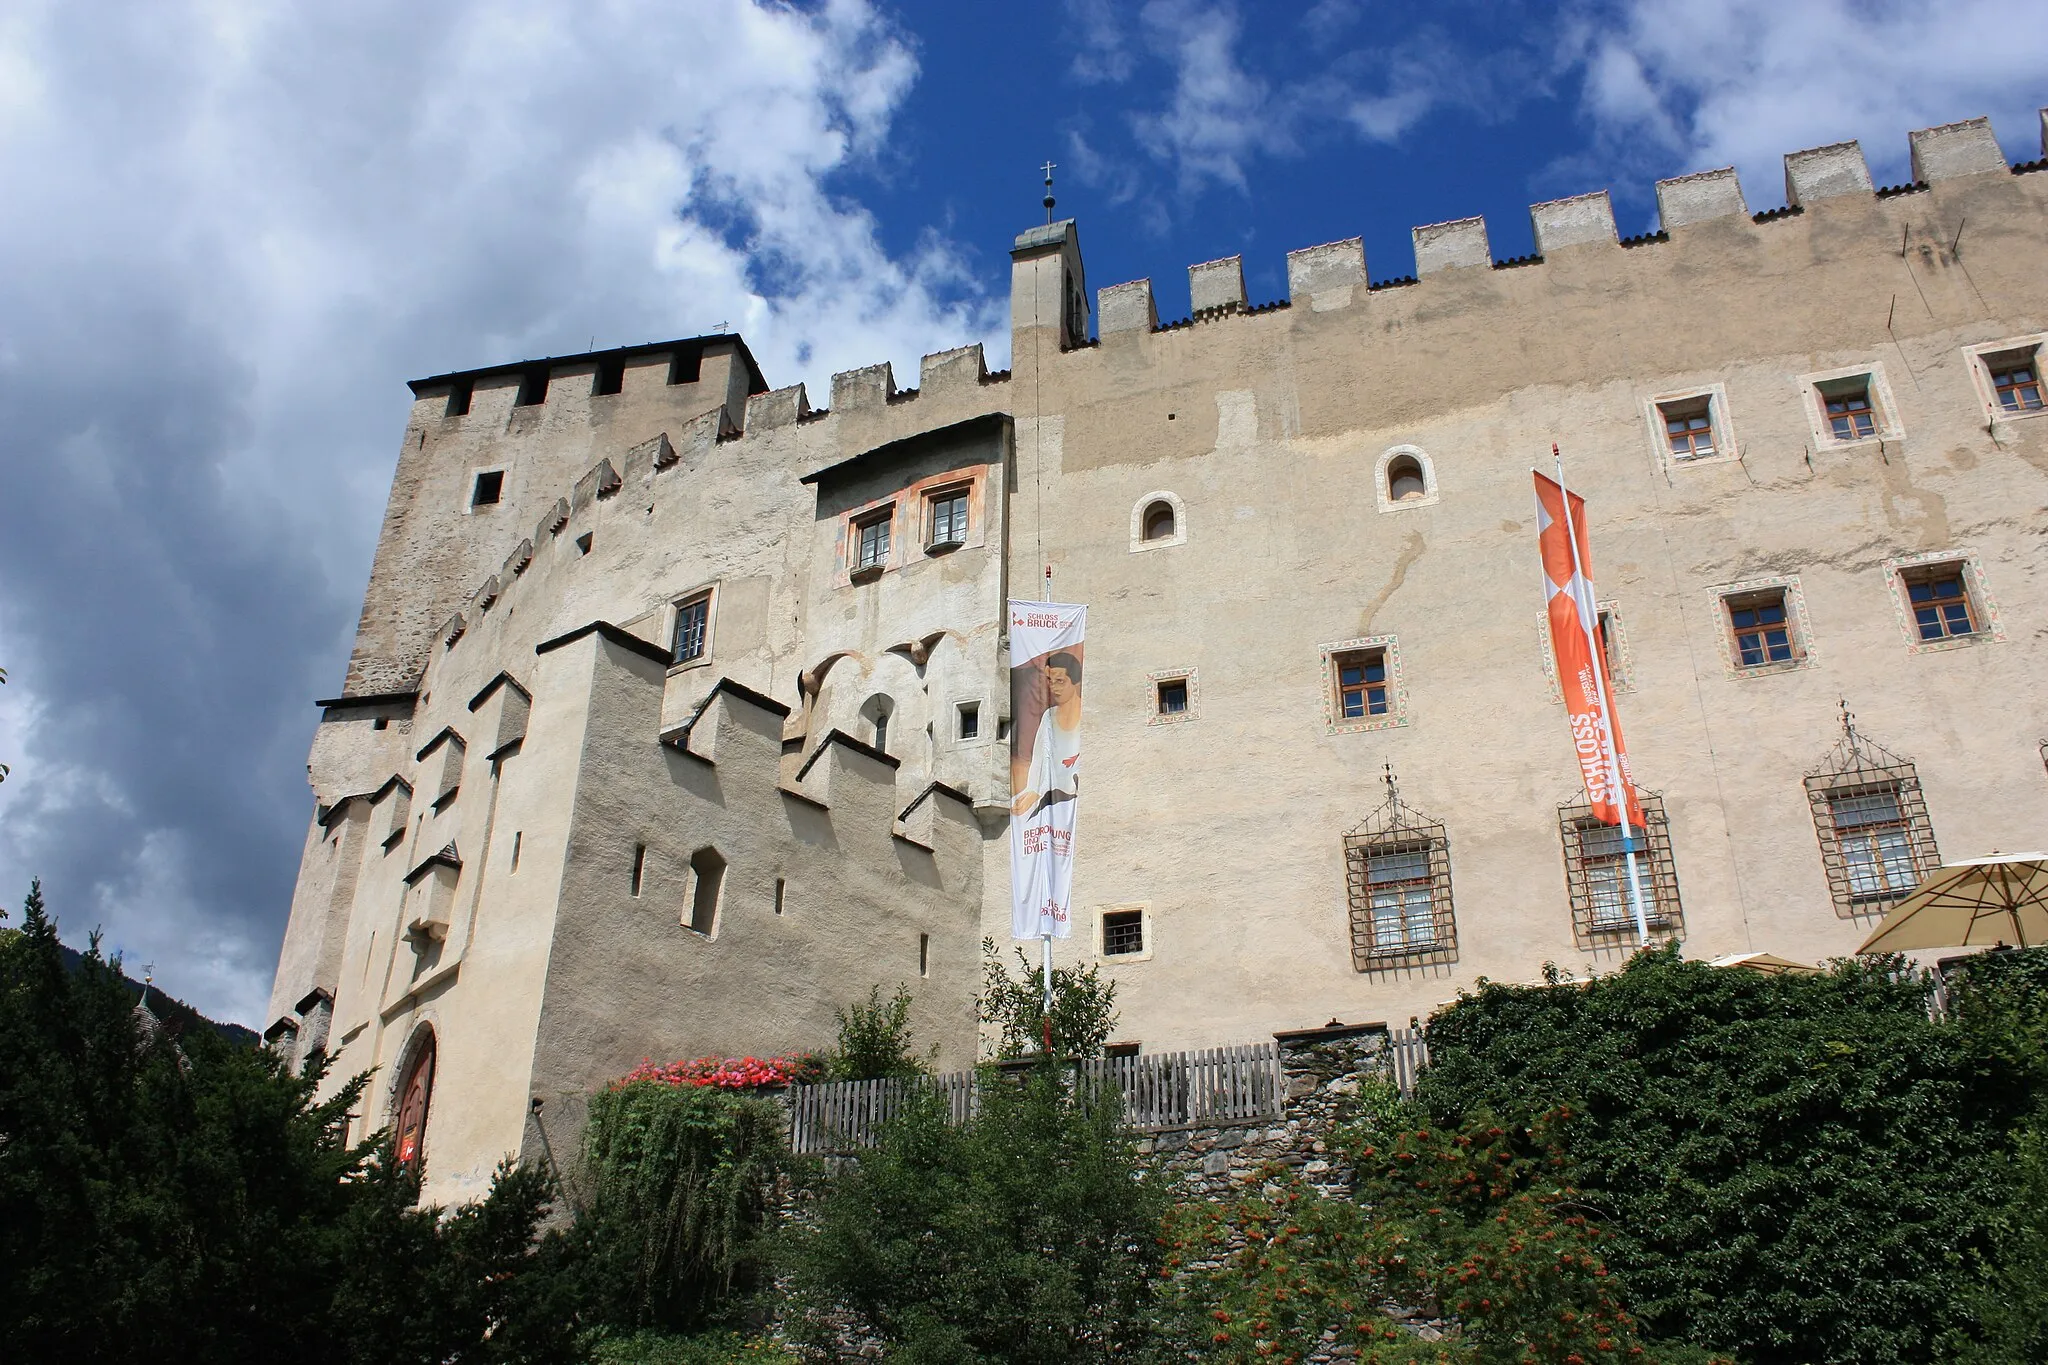 Photo showing: Bruck castle
Locality:Schlossberg

Community:Lienz